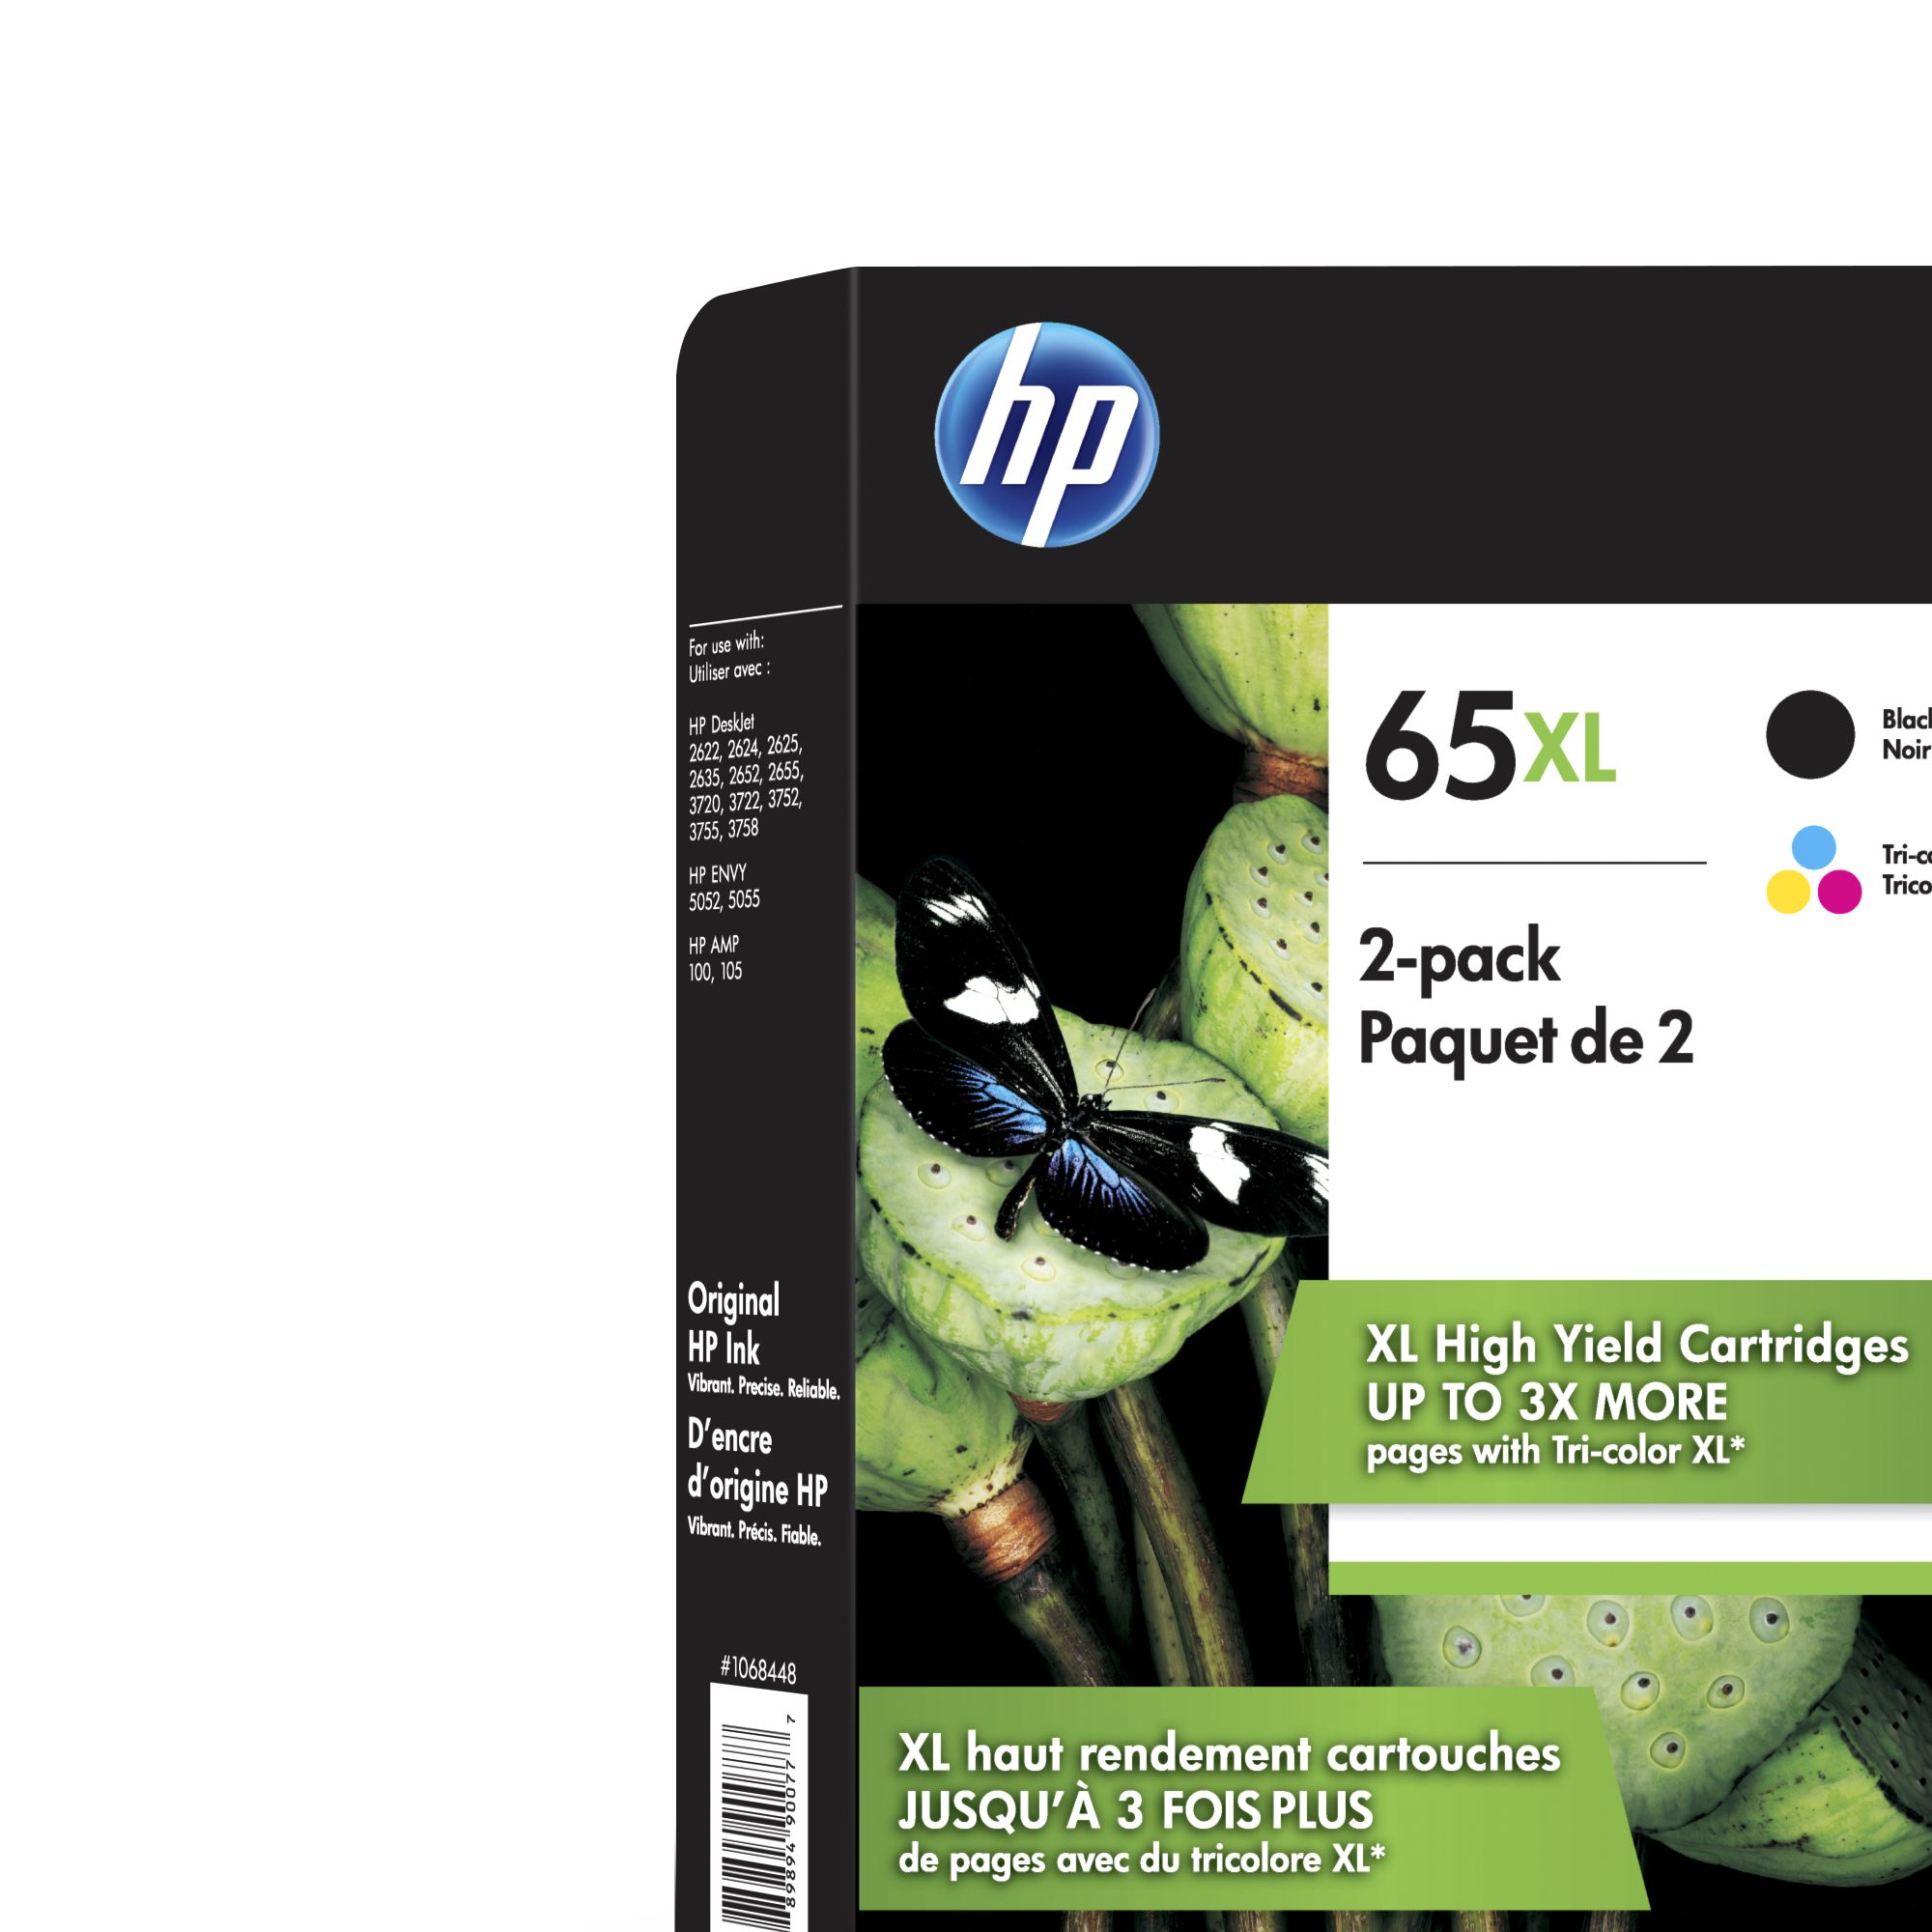 Refill HP 61XL Ink Bundle